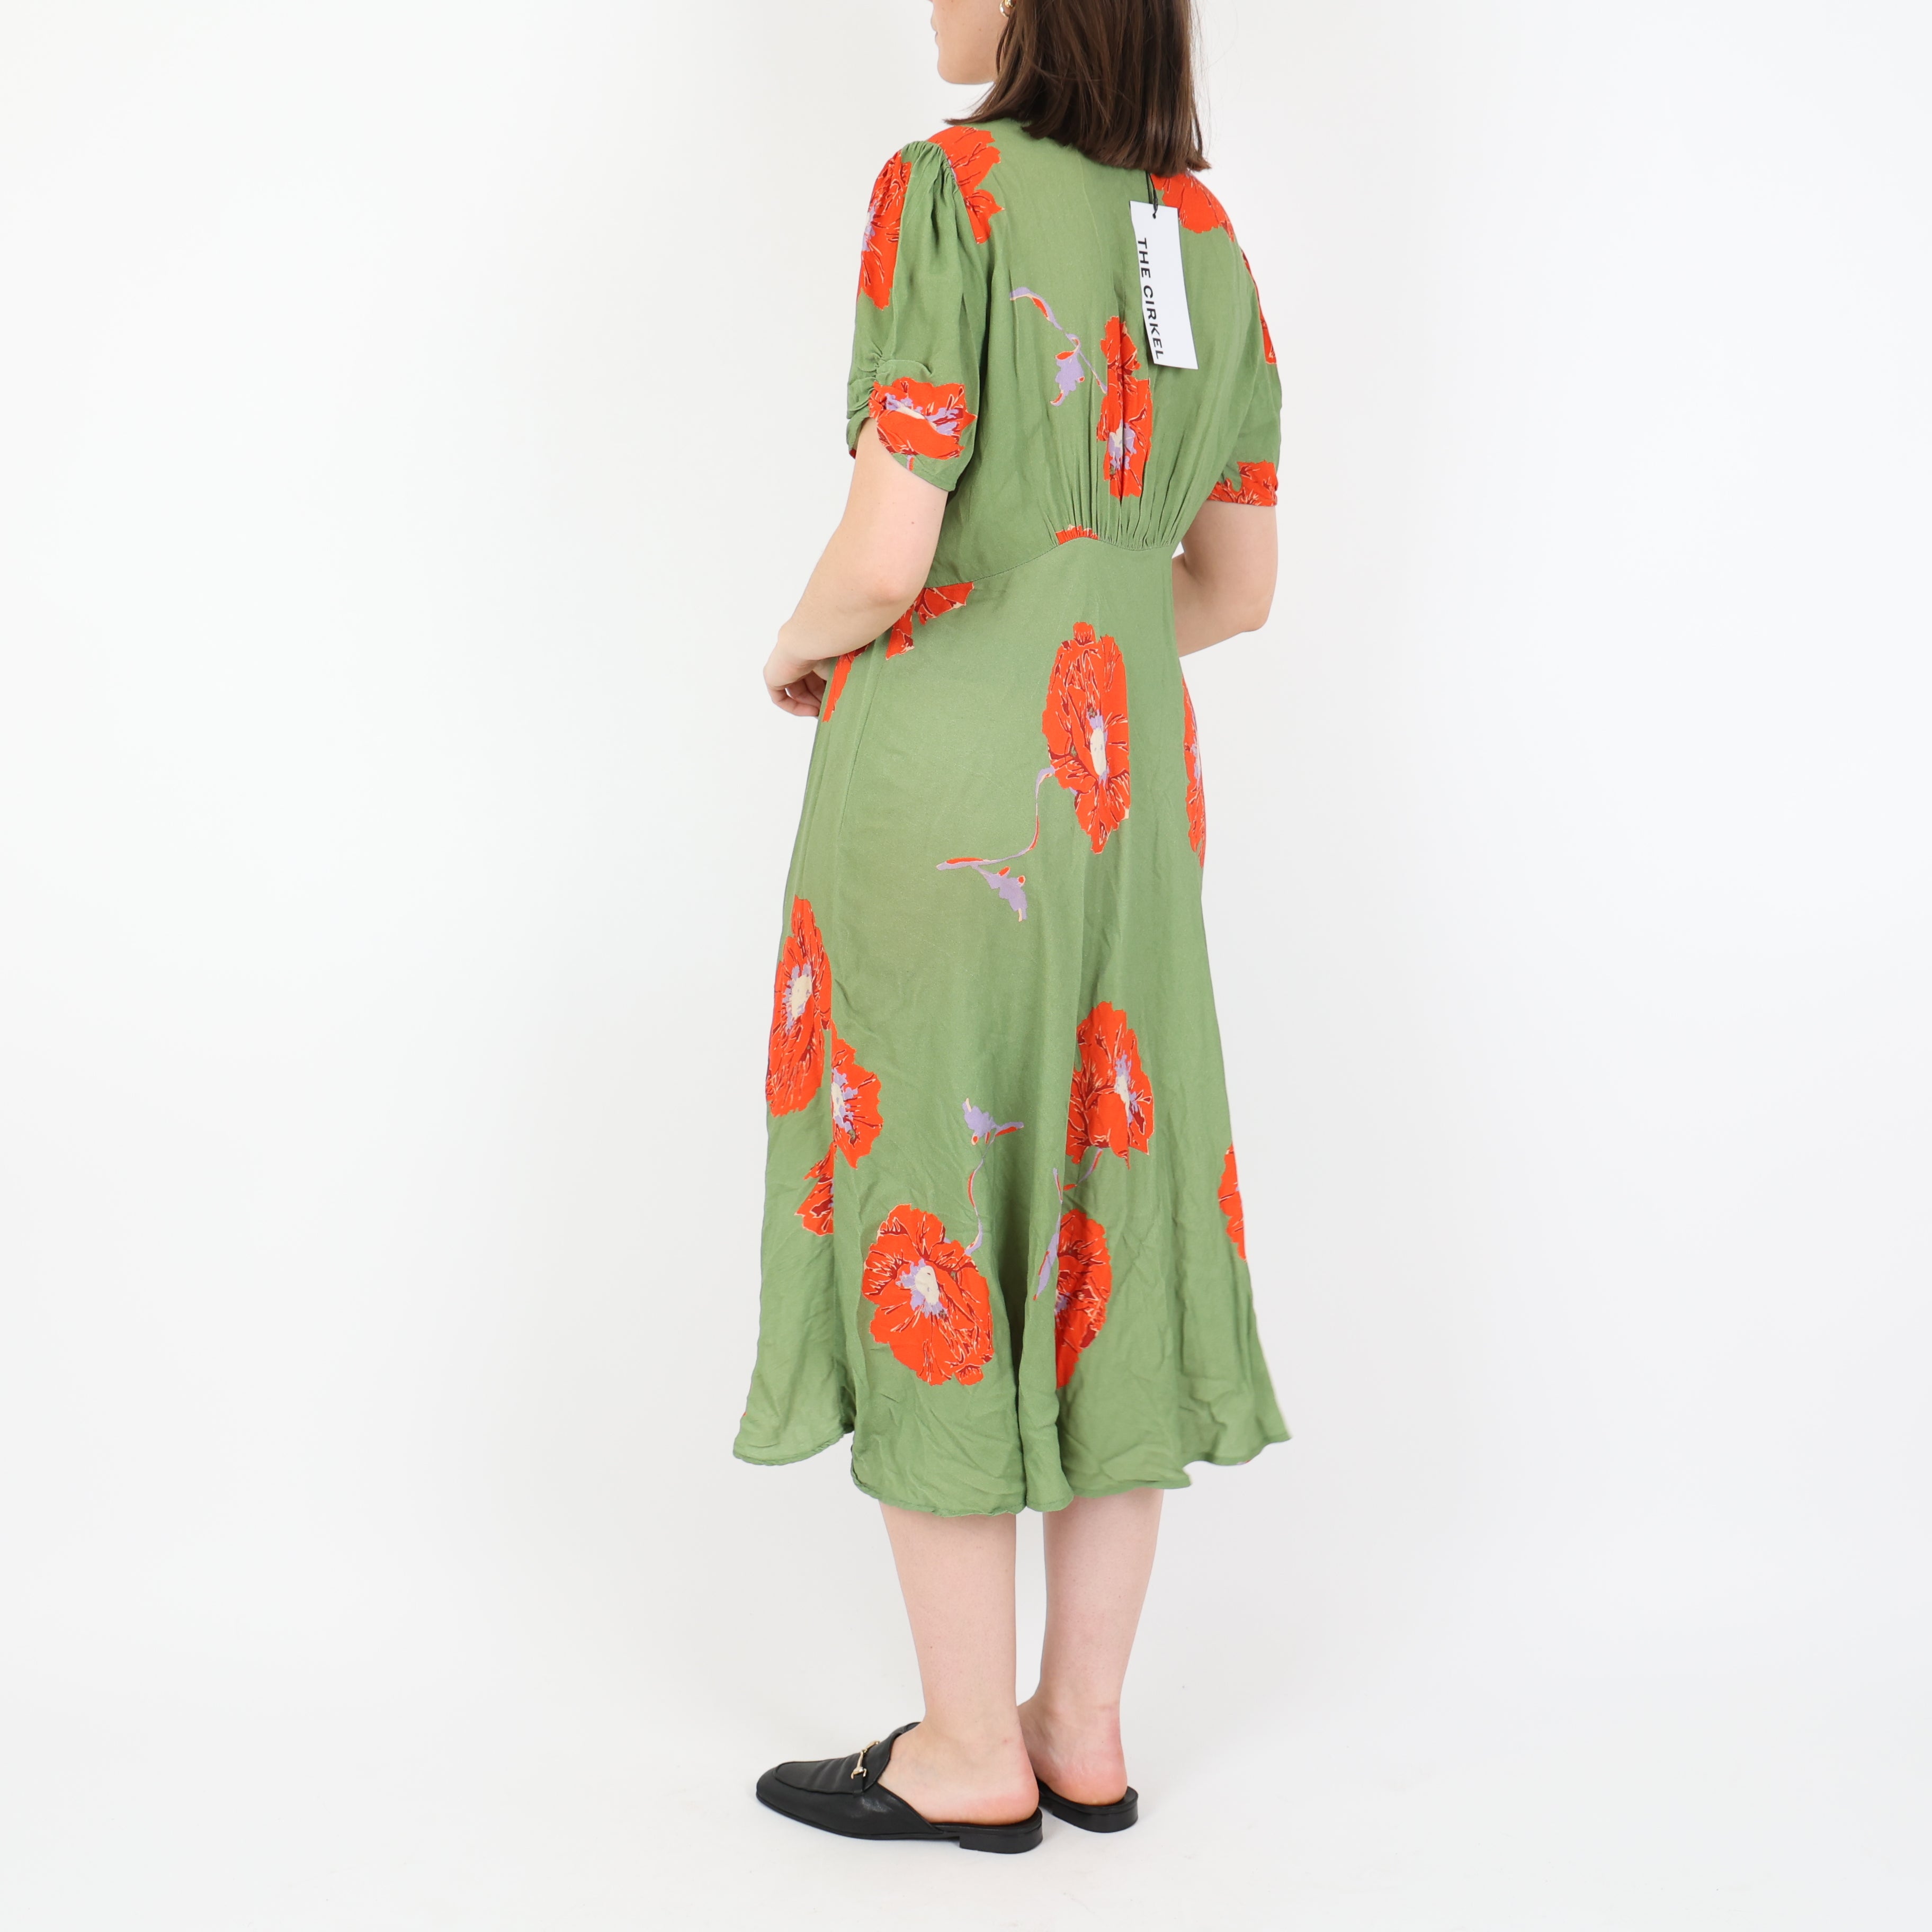 Dress, UK Size 16